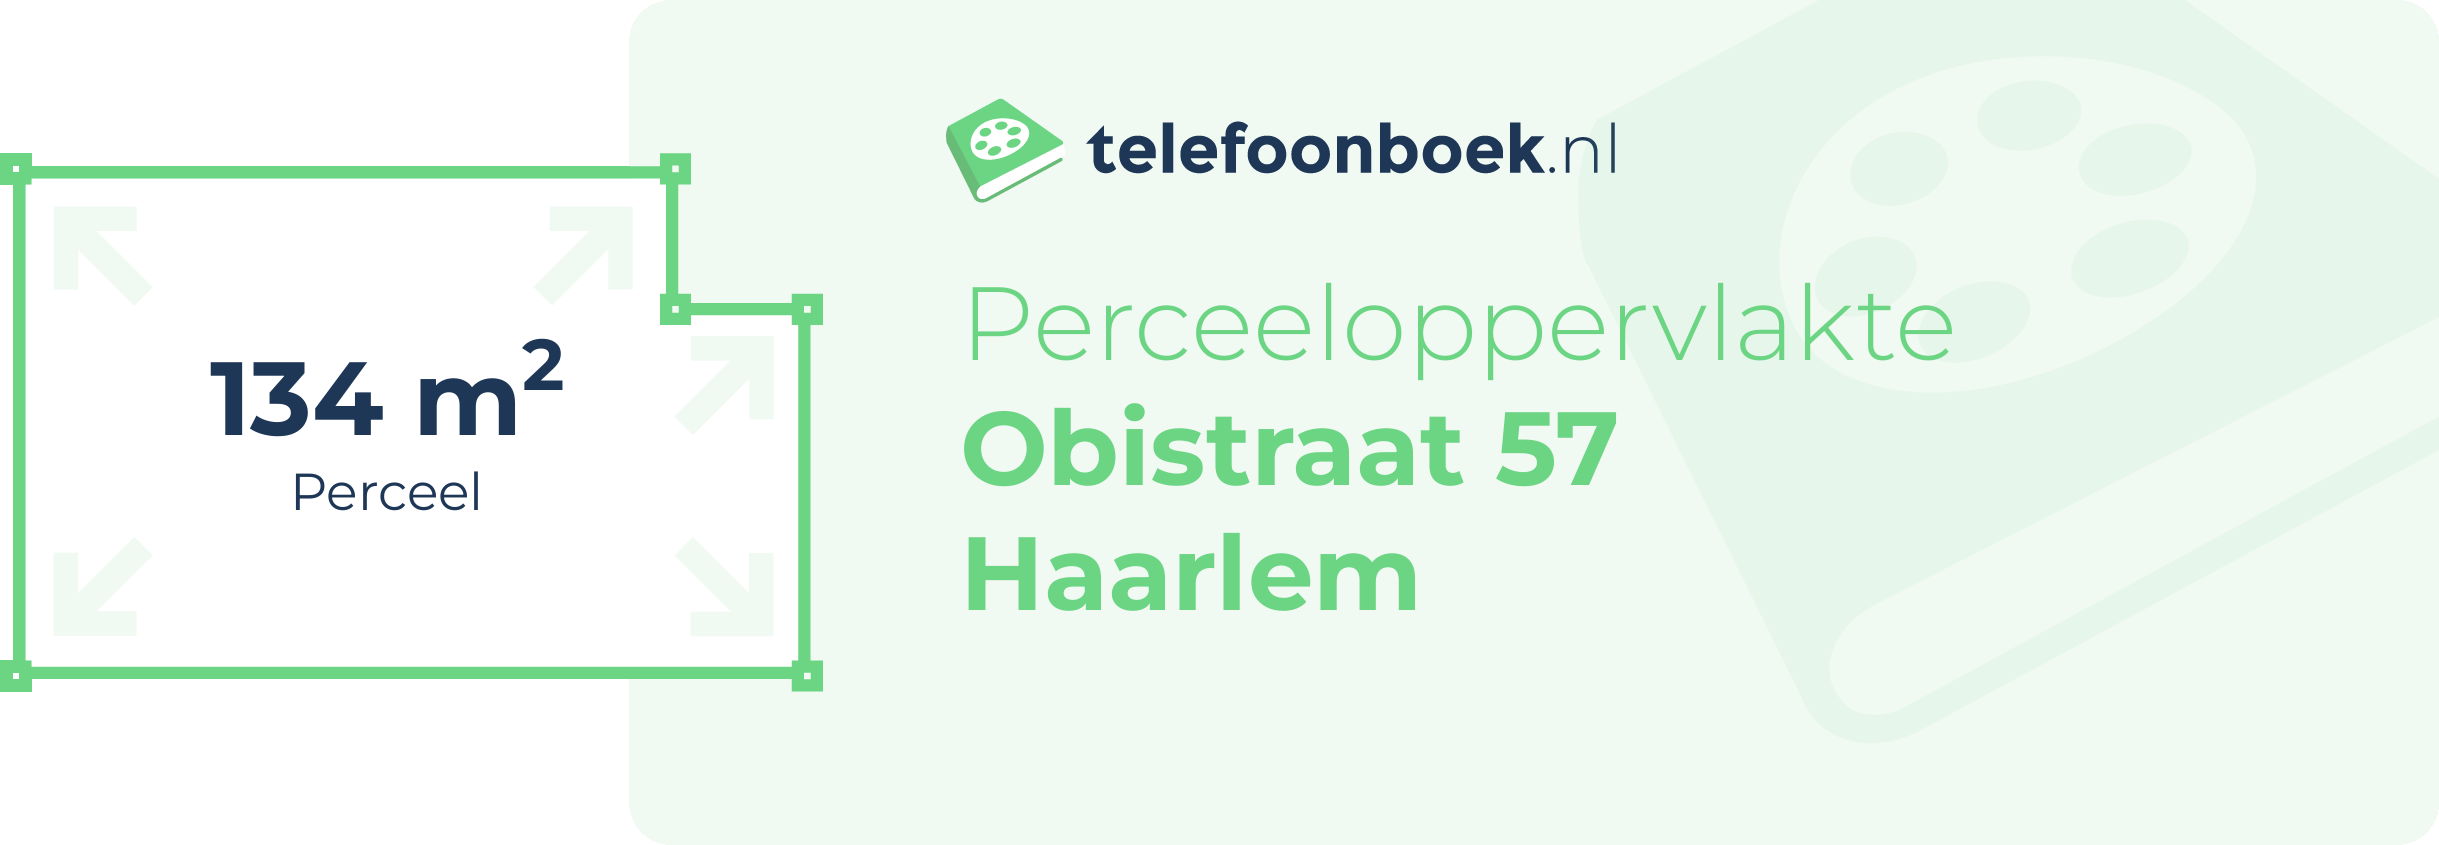 Perceeloppervlakte Obistraat 57 Haarlem